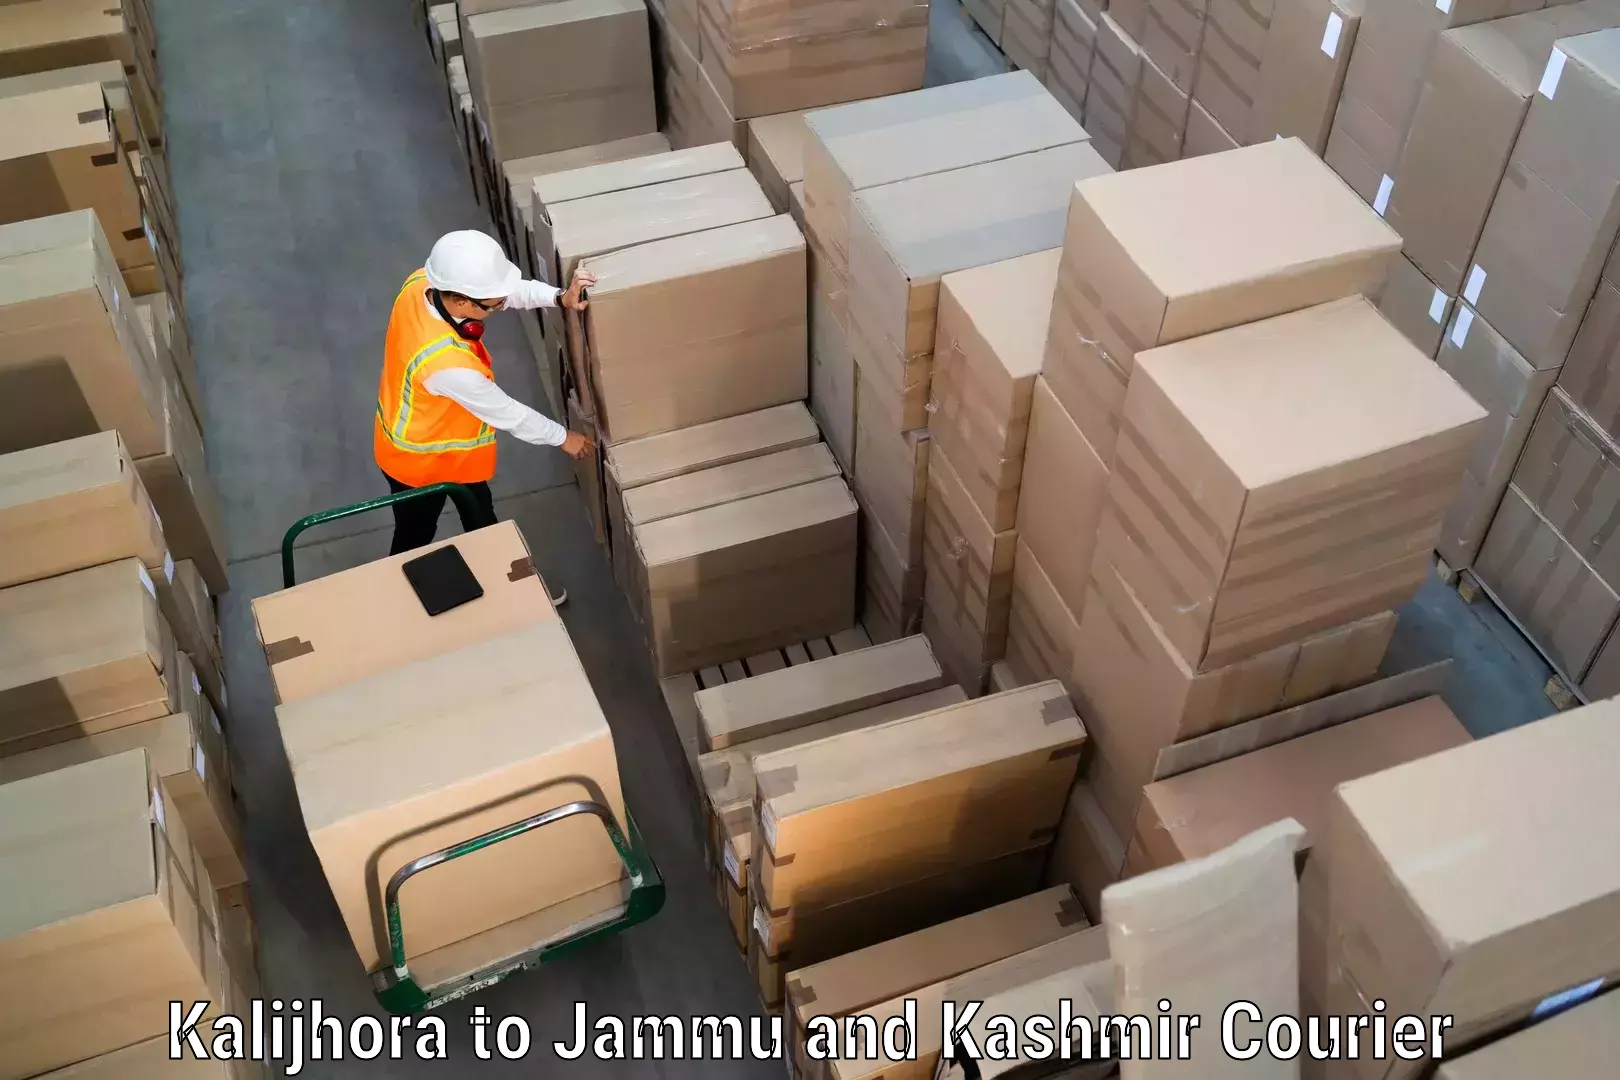 Express mail service in Kalijhora to Jammu and Kashmir